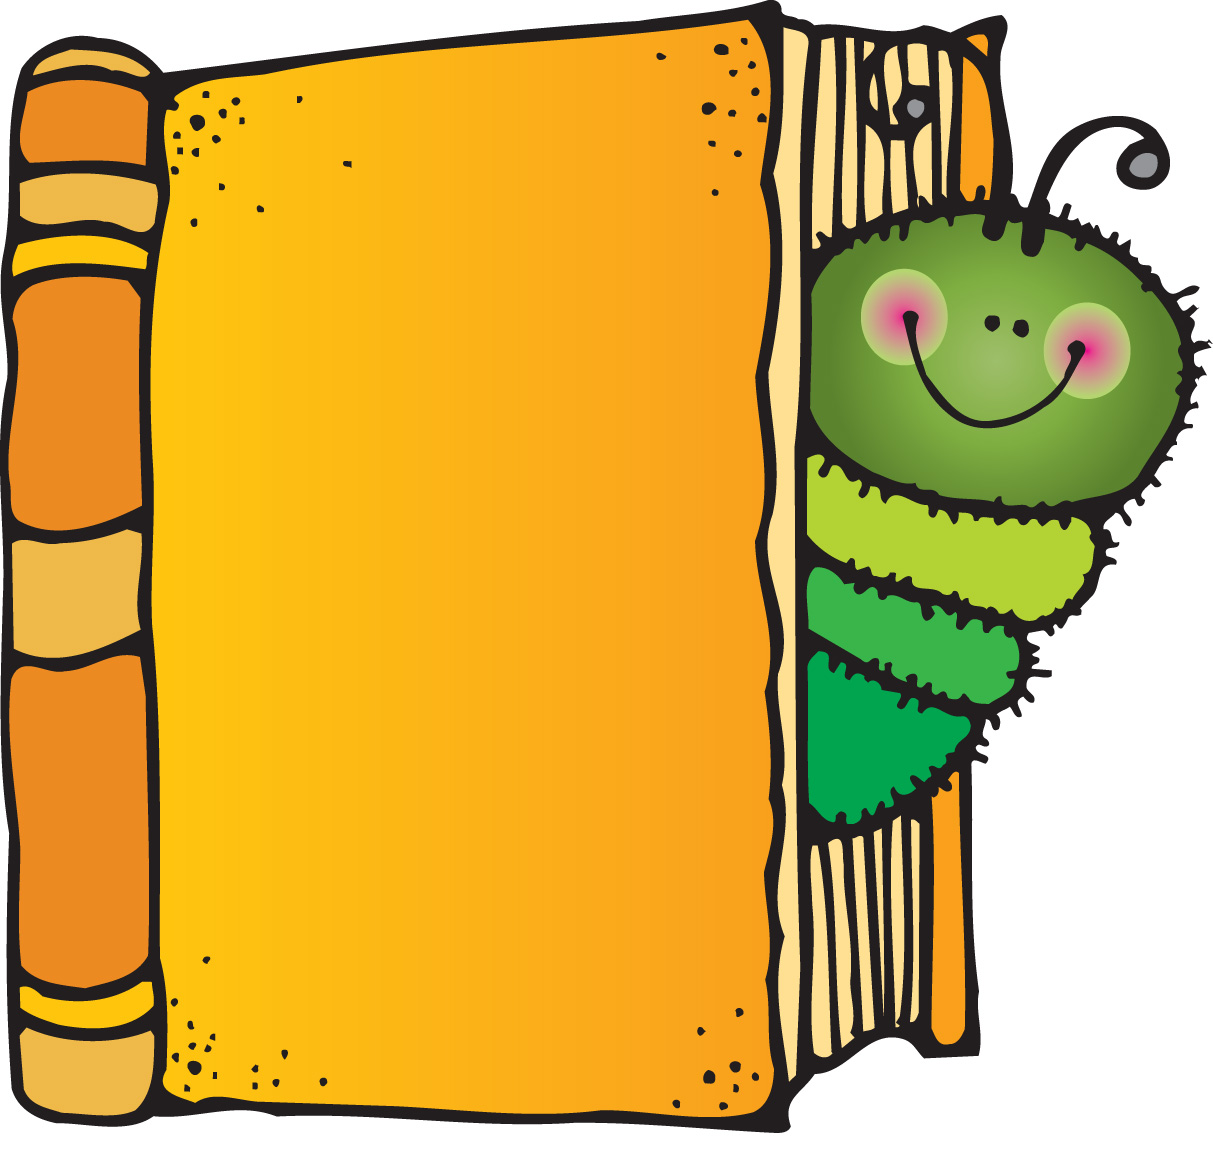 Book worm Stock Image